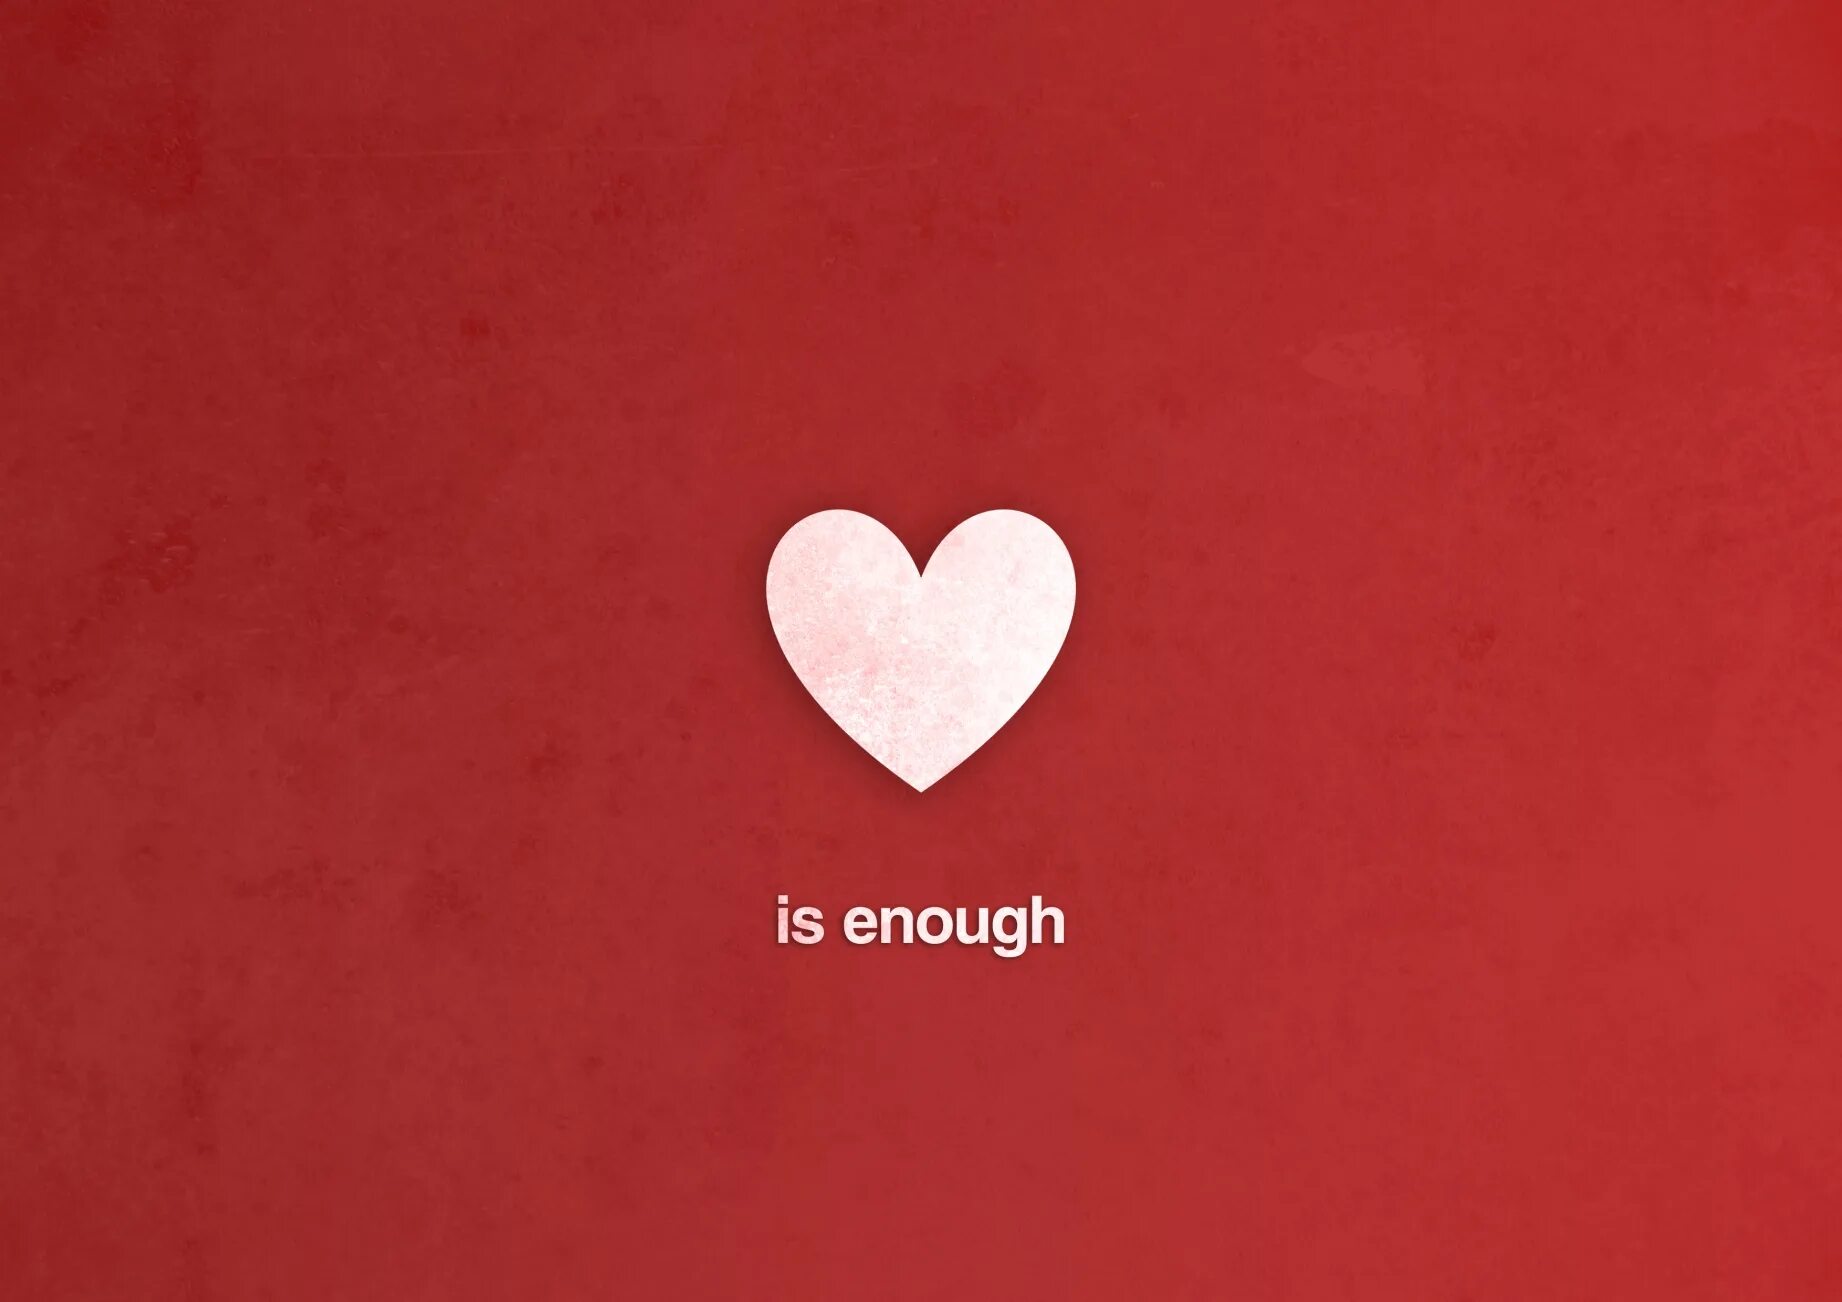 Love is enough. Enough логотип. Обои i Love you. I am enough. L am enough